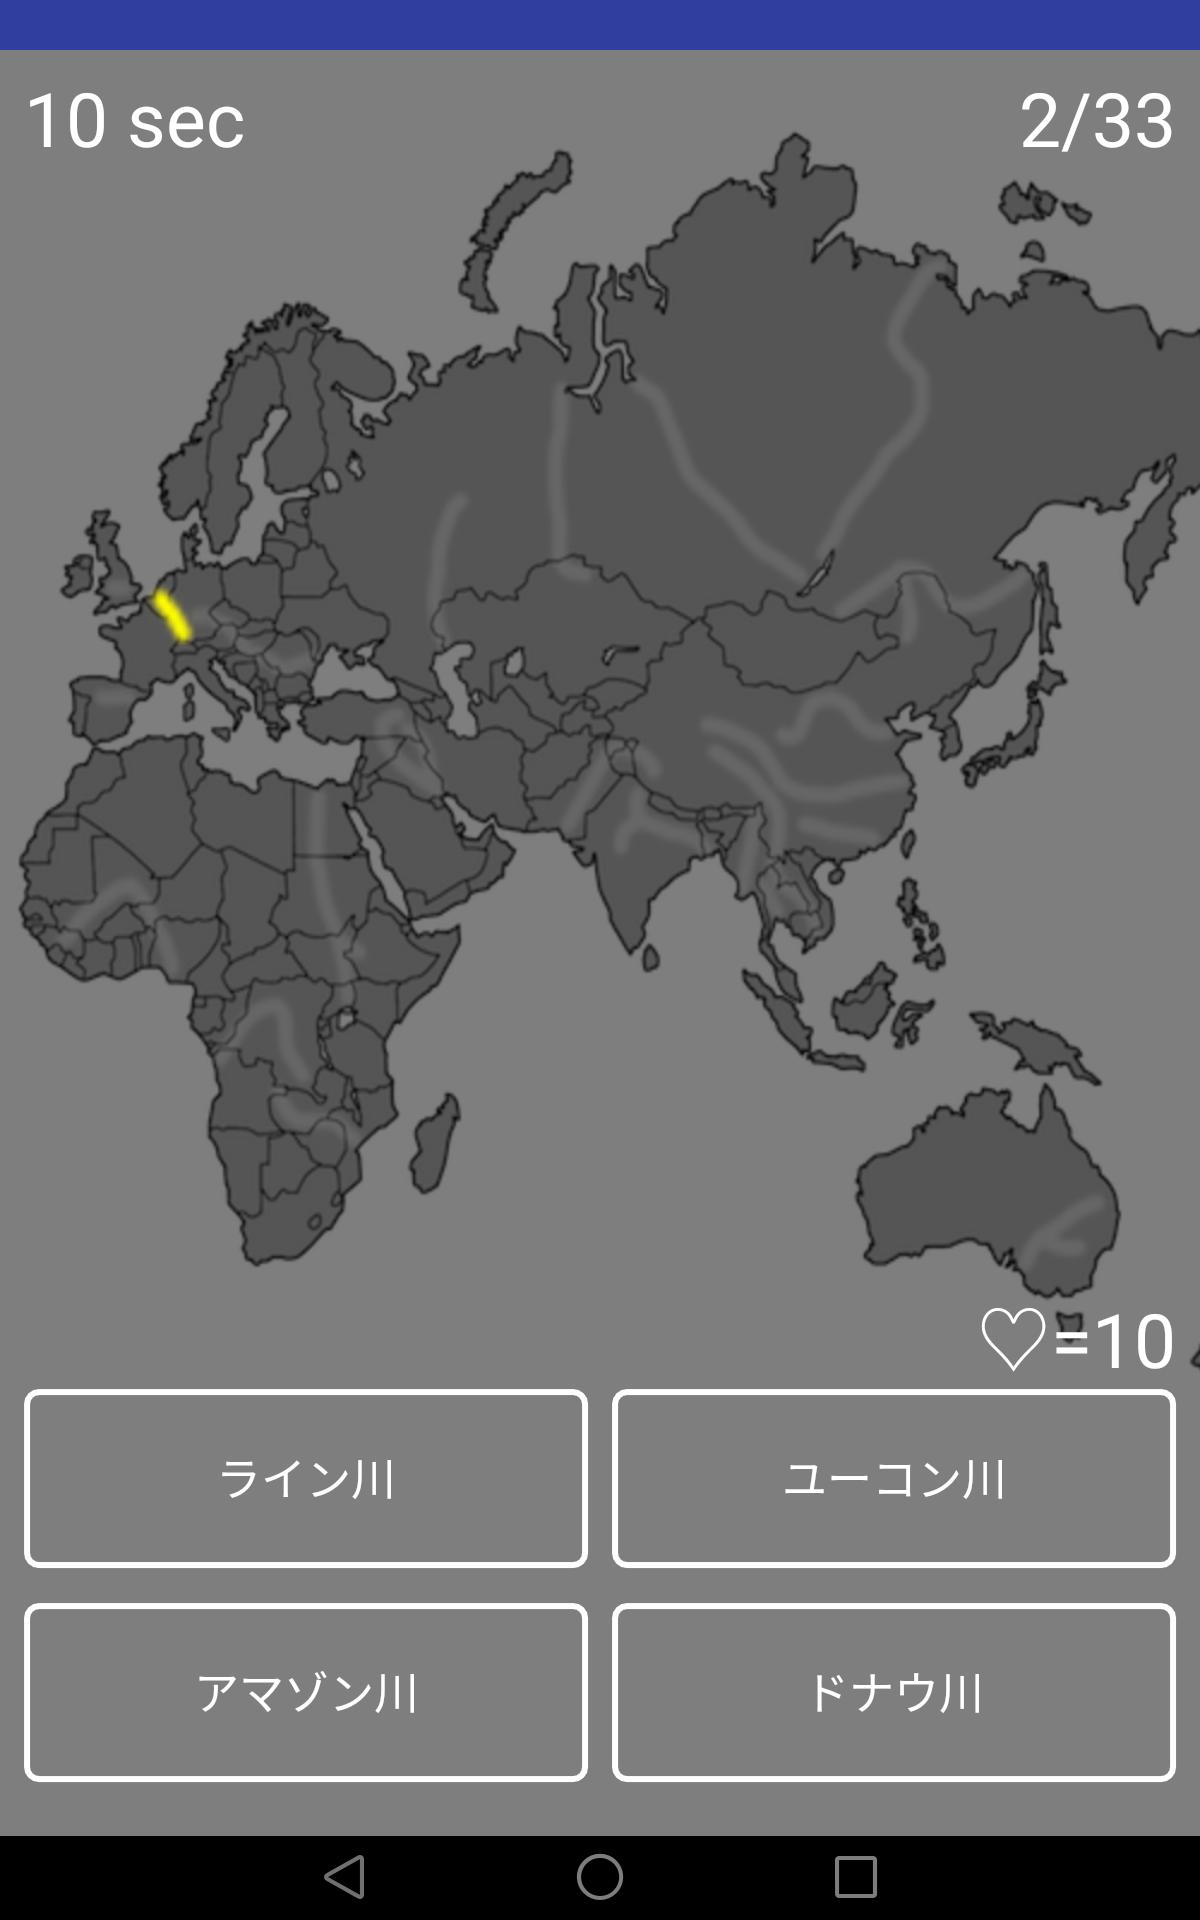 Android 用の 世界地理の位置や名前を覚えるクイズアプリ Apk を